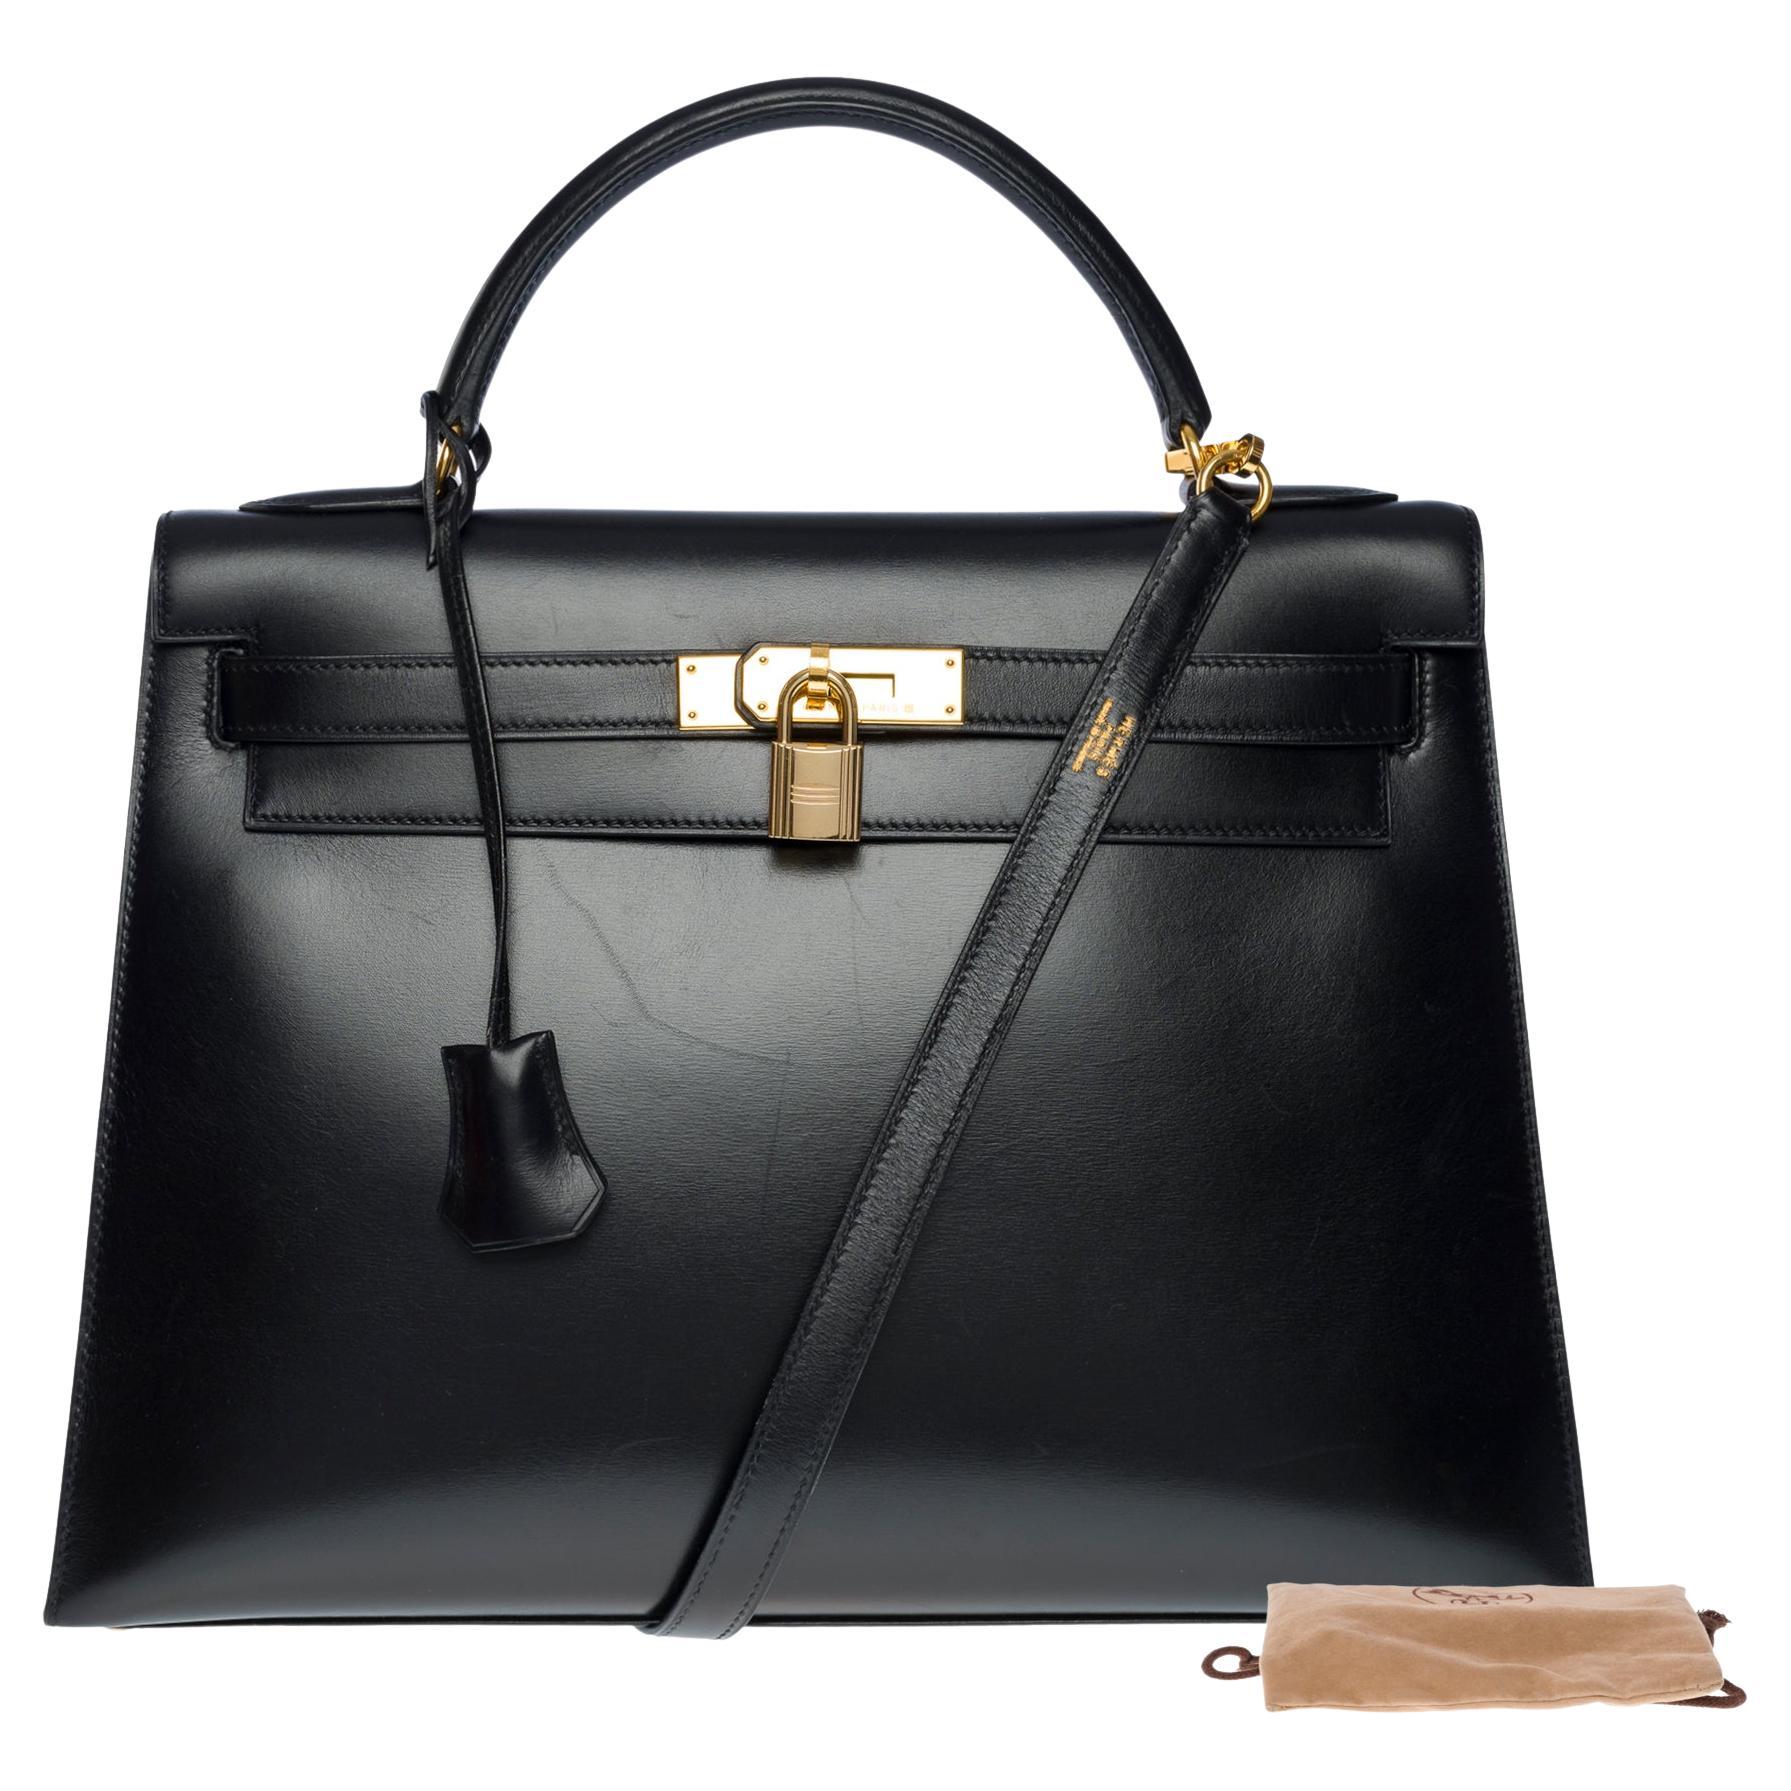 Gorgeous Hermès Kelly 32 sellier handbag strap in black box calf leather, GHW For Sale